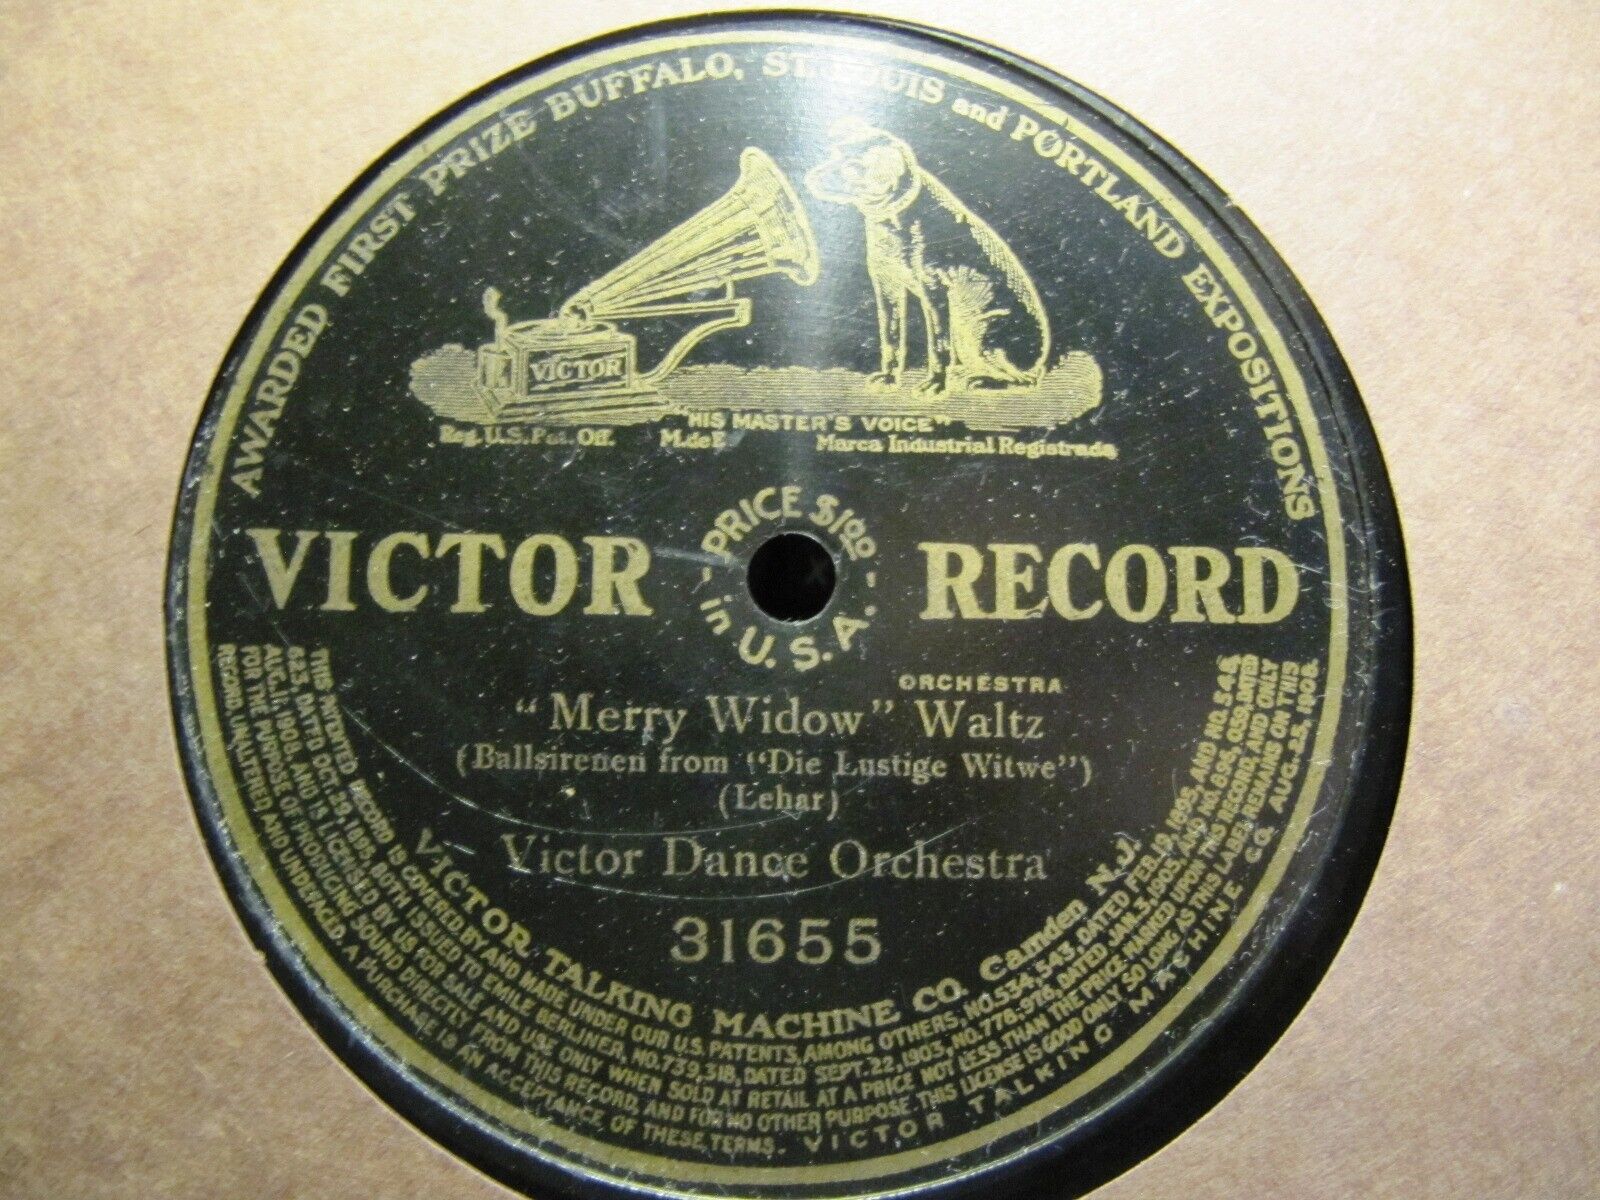 1907 VICTOR DANCE ORCHESTRA Franz LEHAR Merry Widow Waltz Walter B. Rogers 31655